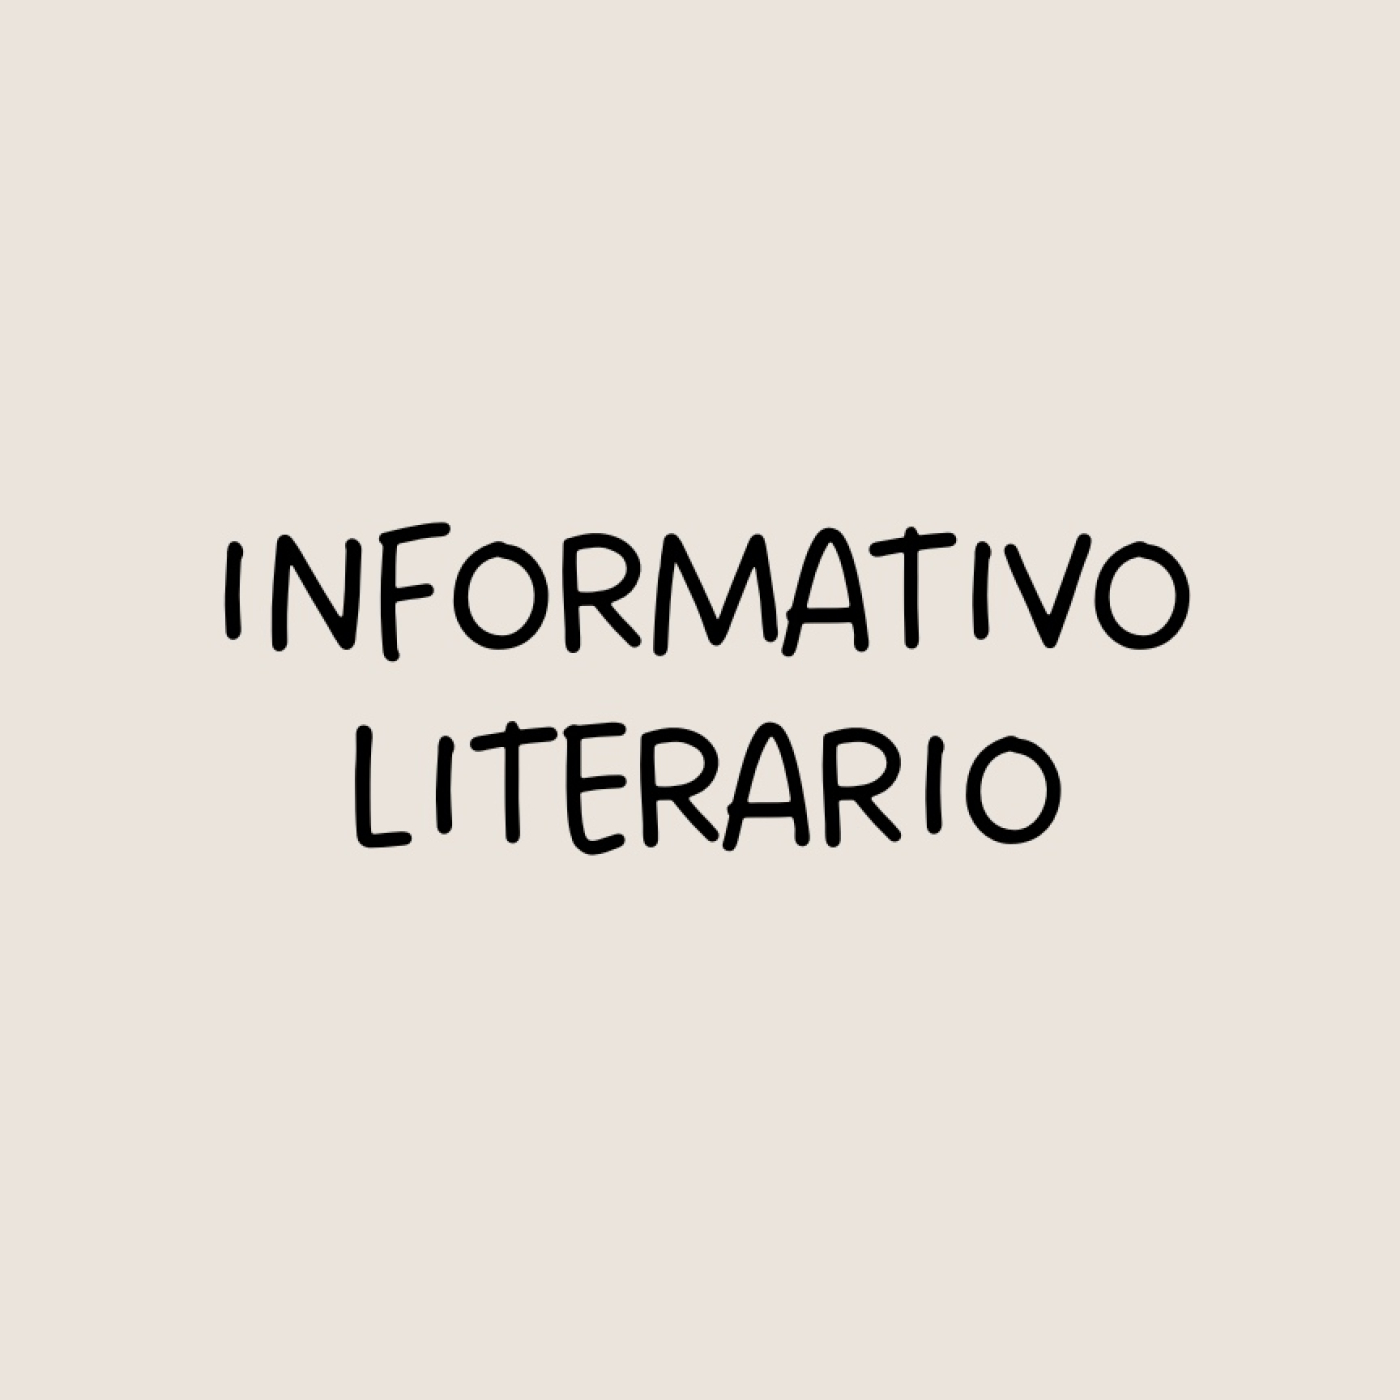 Informativo literario. Fallece Milan Kundera